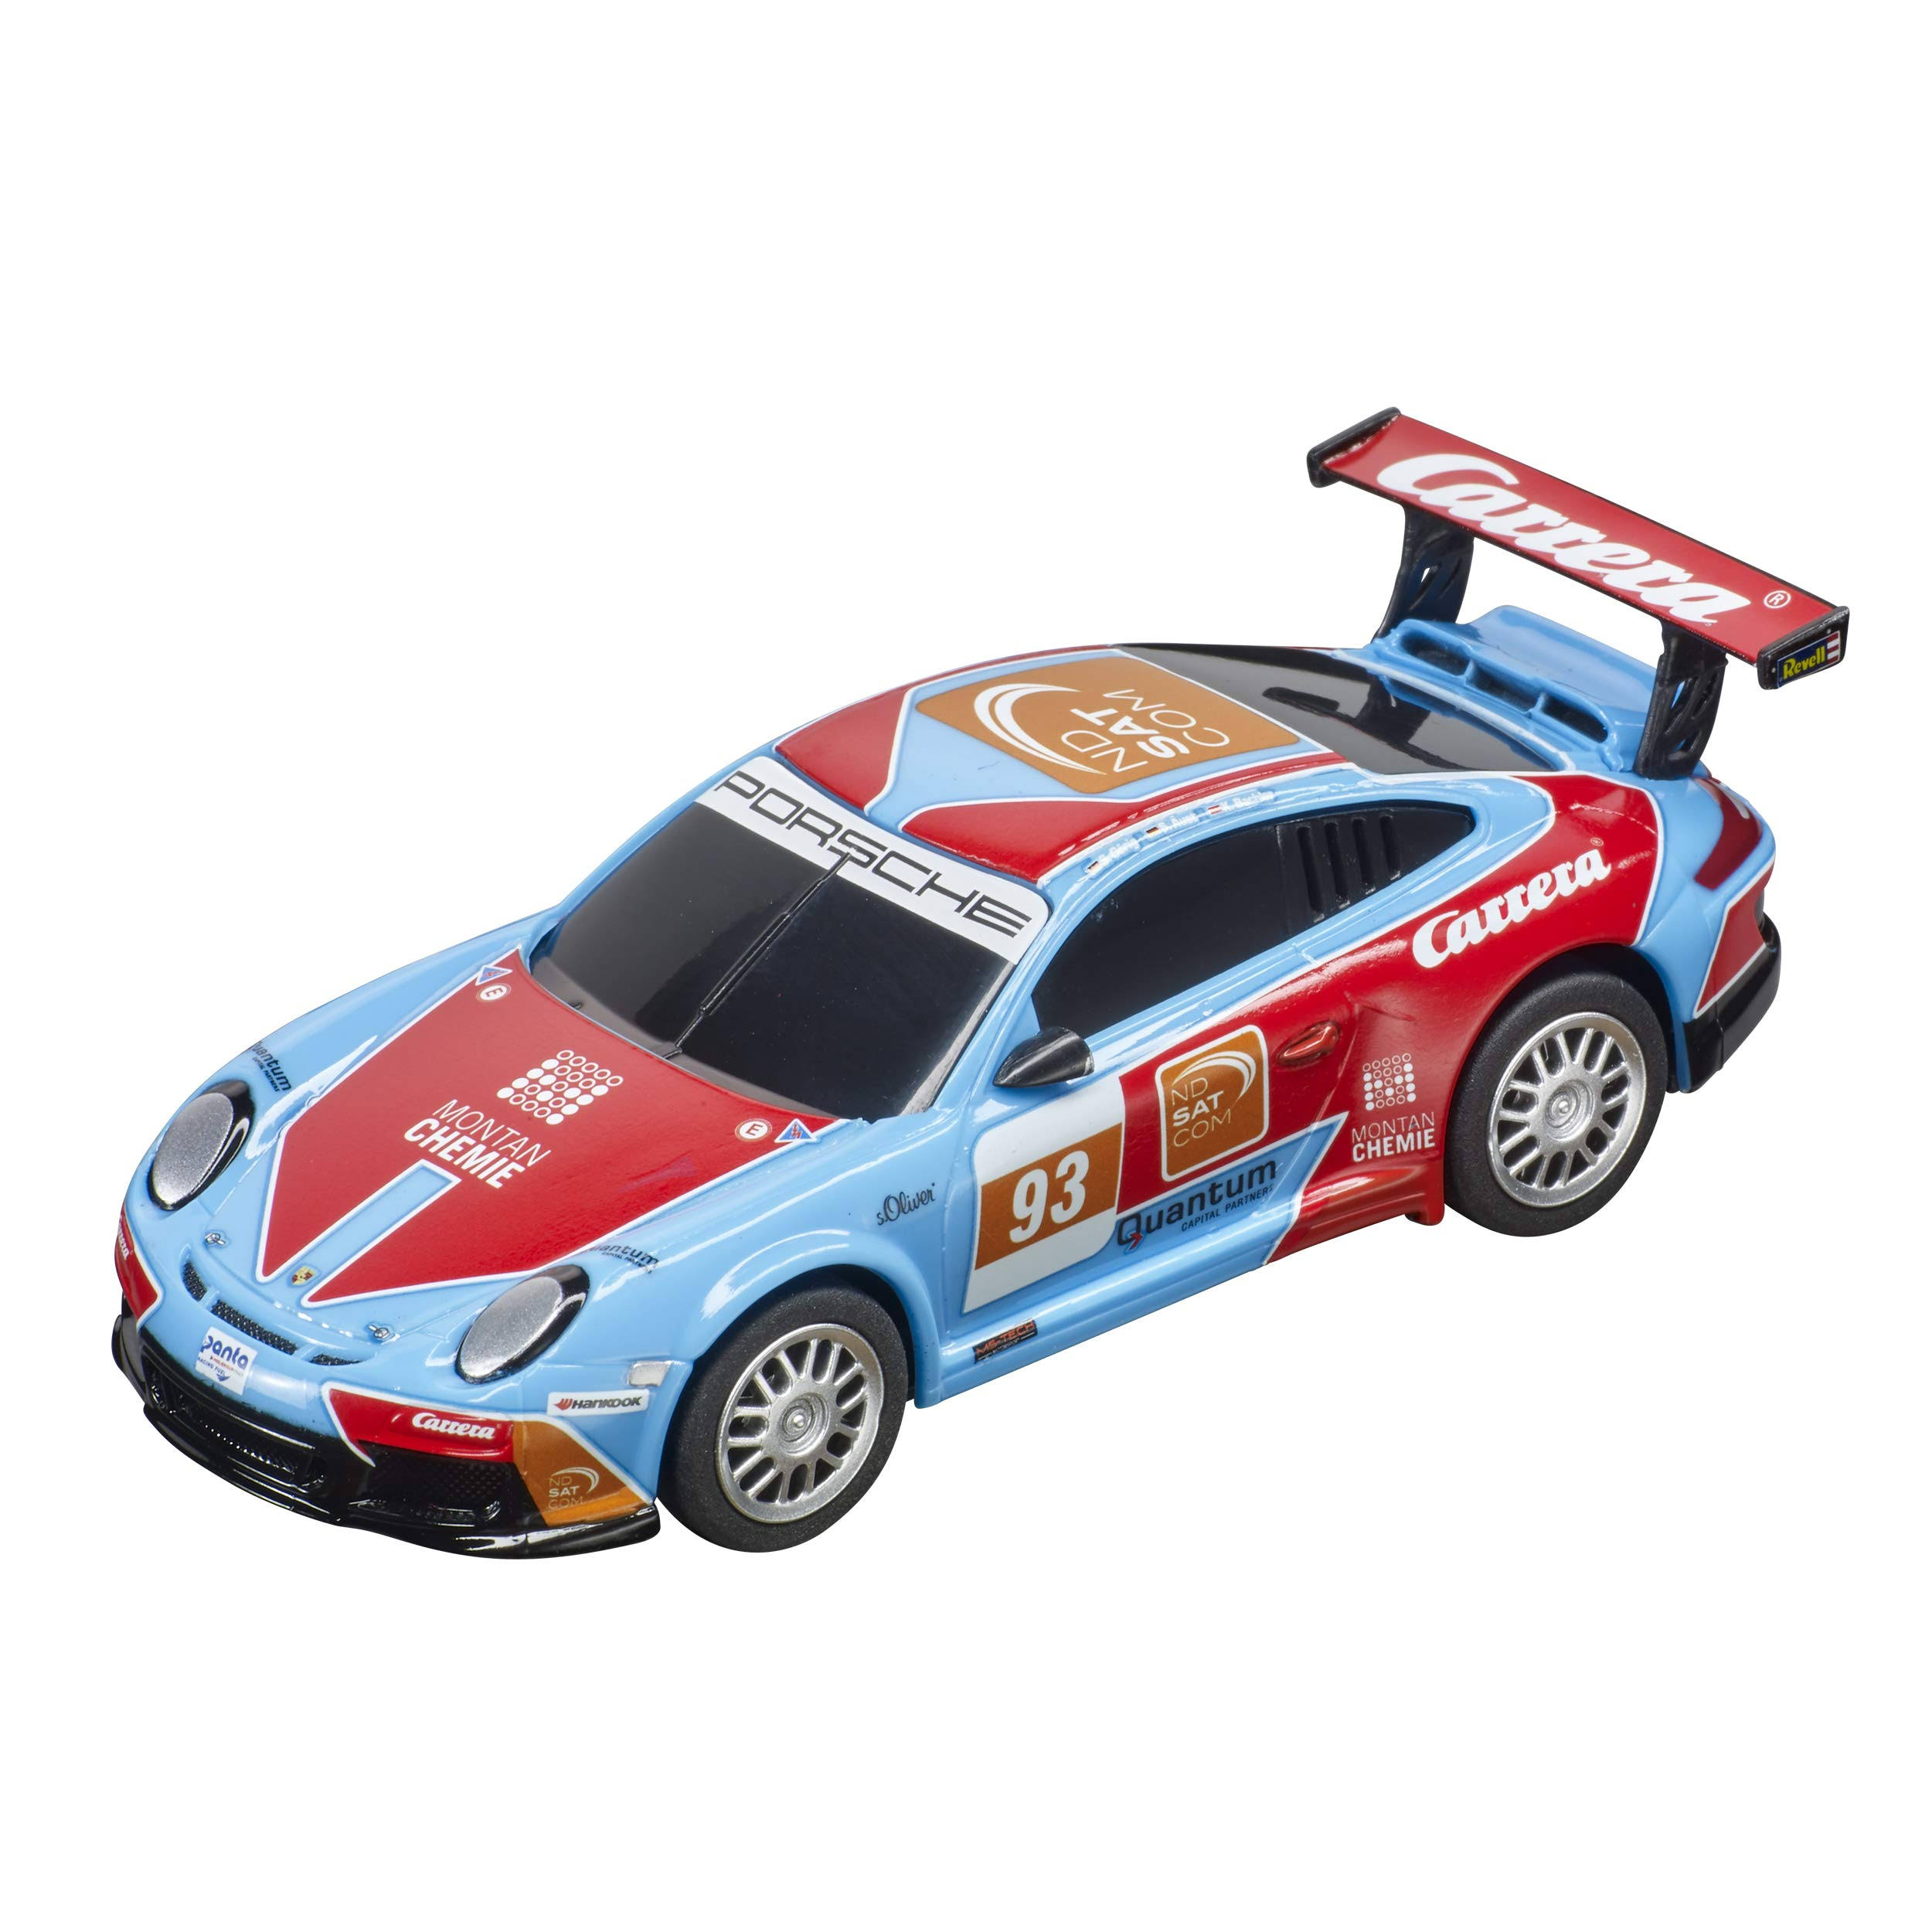 Carrera 64187 Porsche 997 GT3 Carrera Blue 1:43 Scale Analog Slot Car